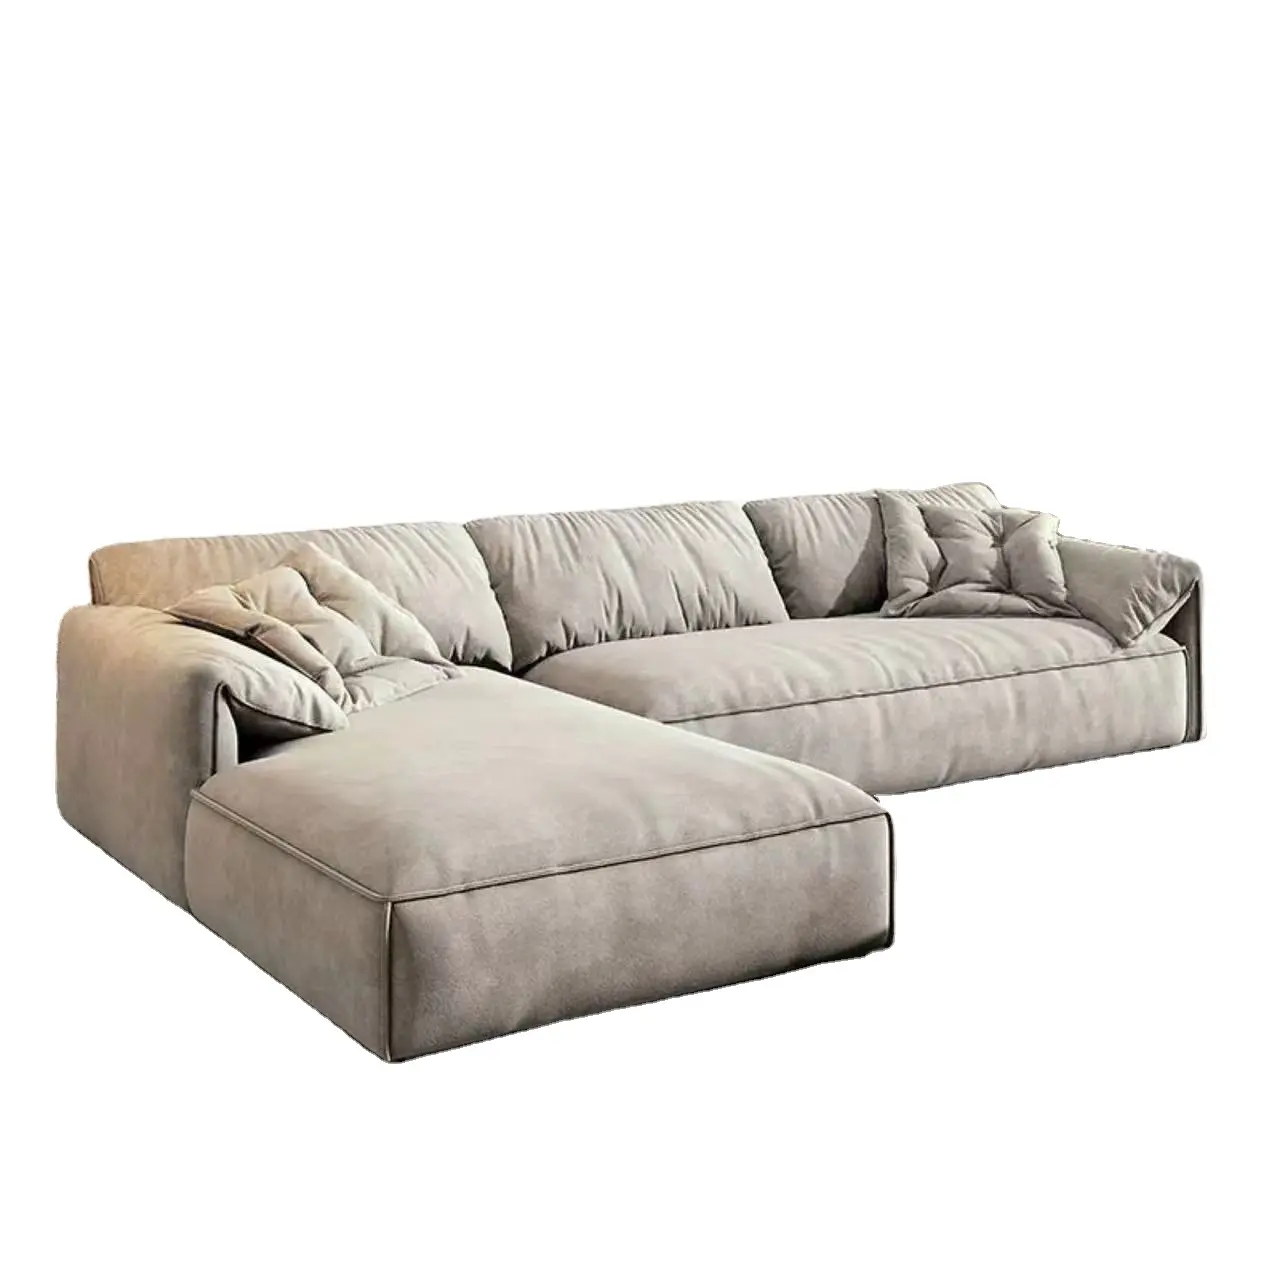 Modern new design upholstery living room furniture L shape fabric sofa living room sofa set